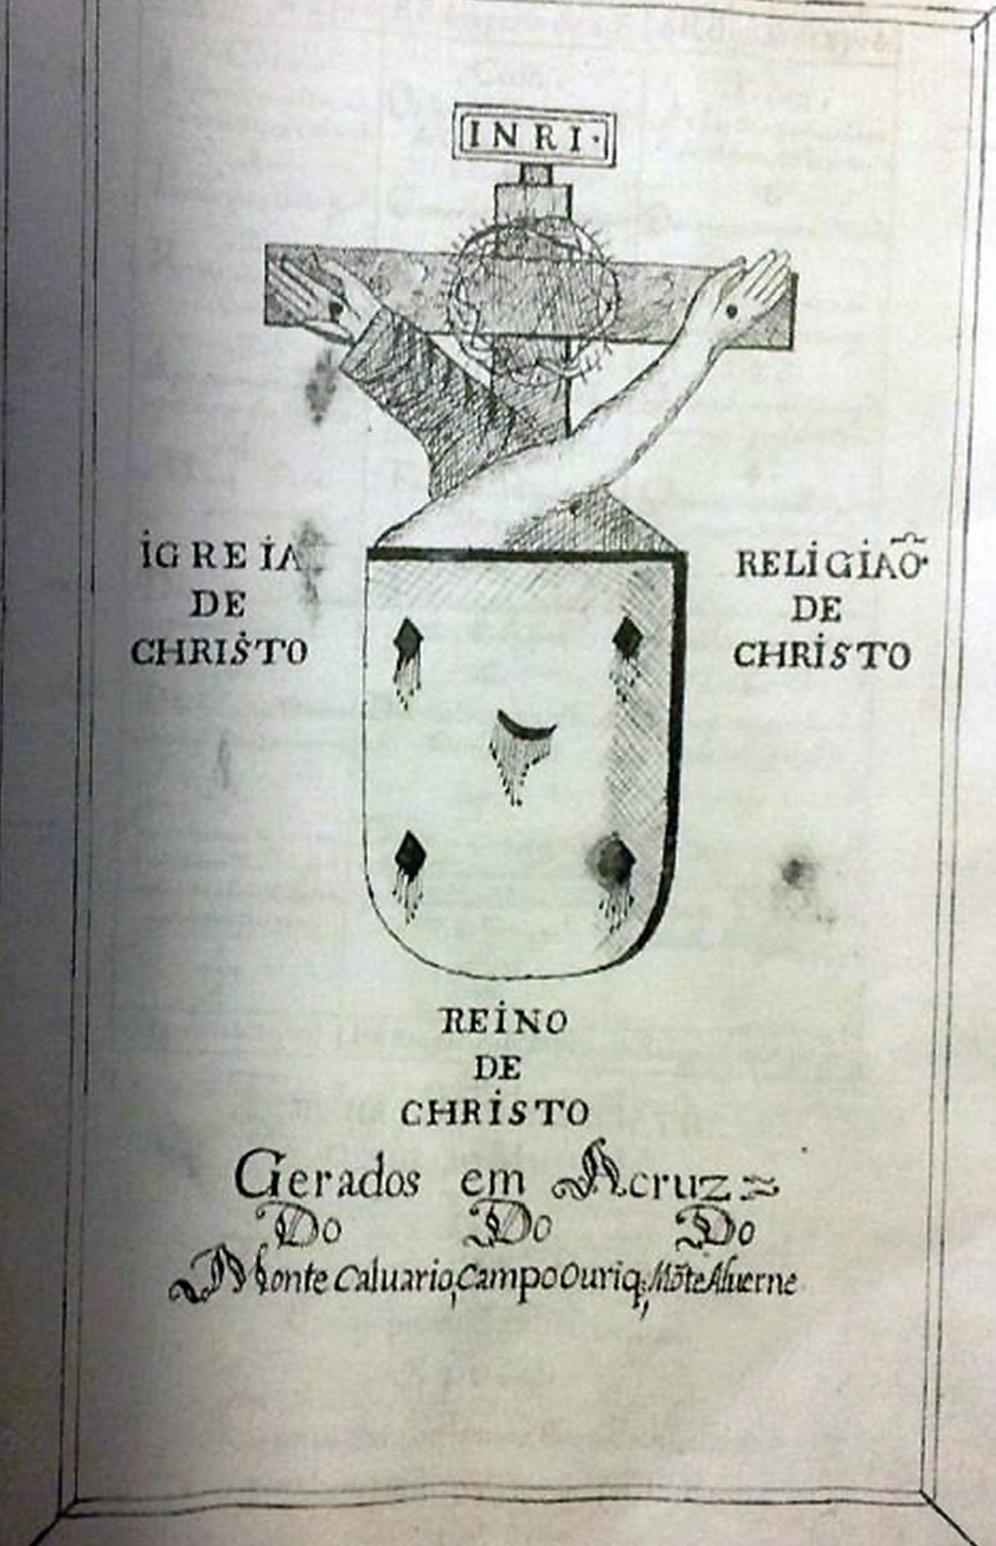 Looking through the Vizão Feita por Xpo a el Rey Dom Affonso Henriques (1659) 7 family.